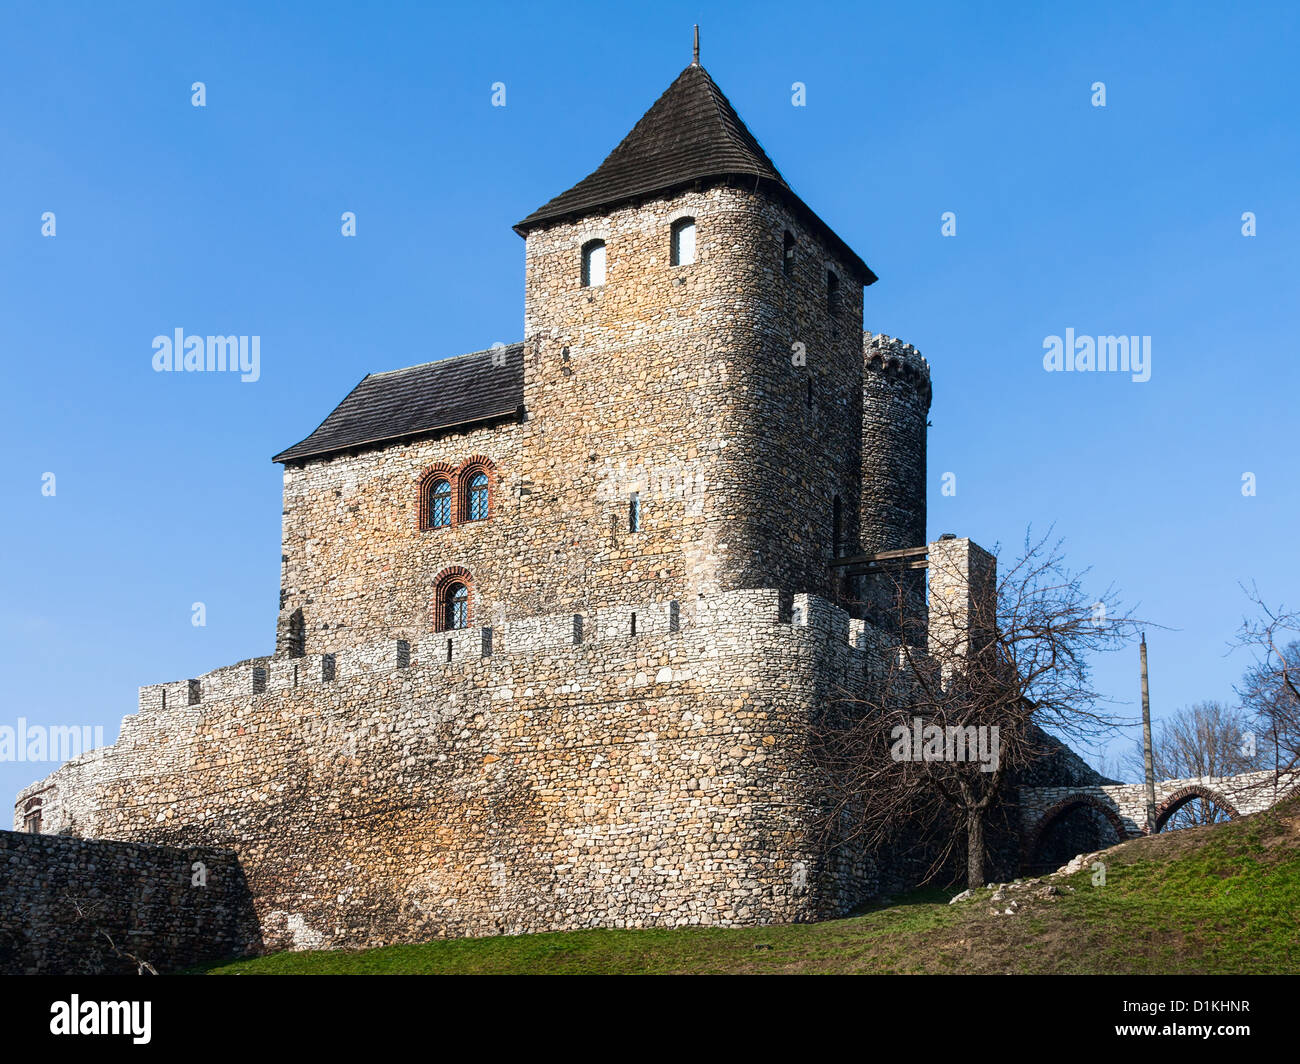 Medieval castle Bedzin in Poland Stock Photo